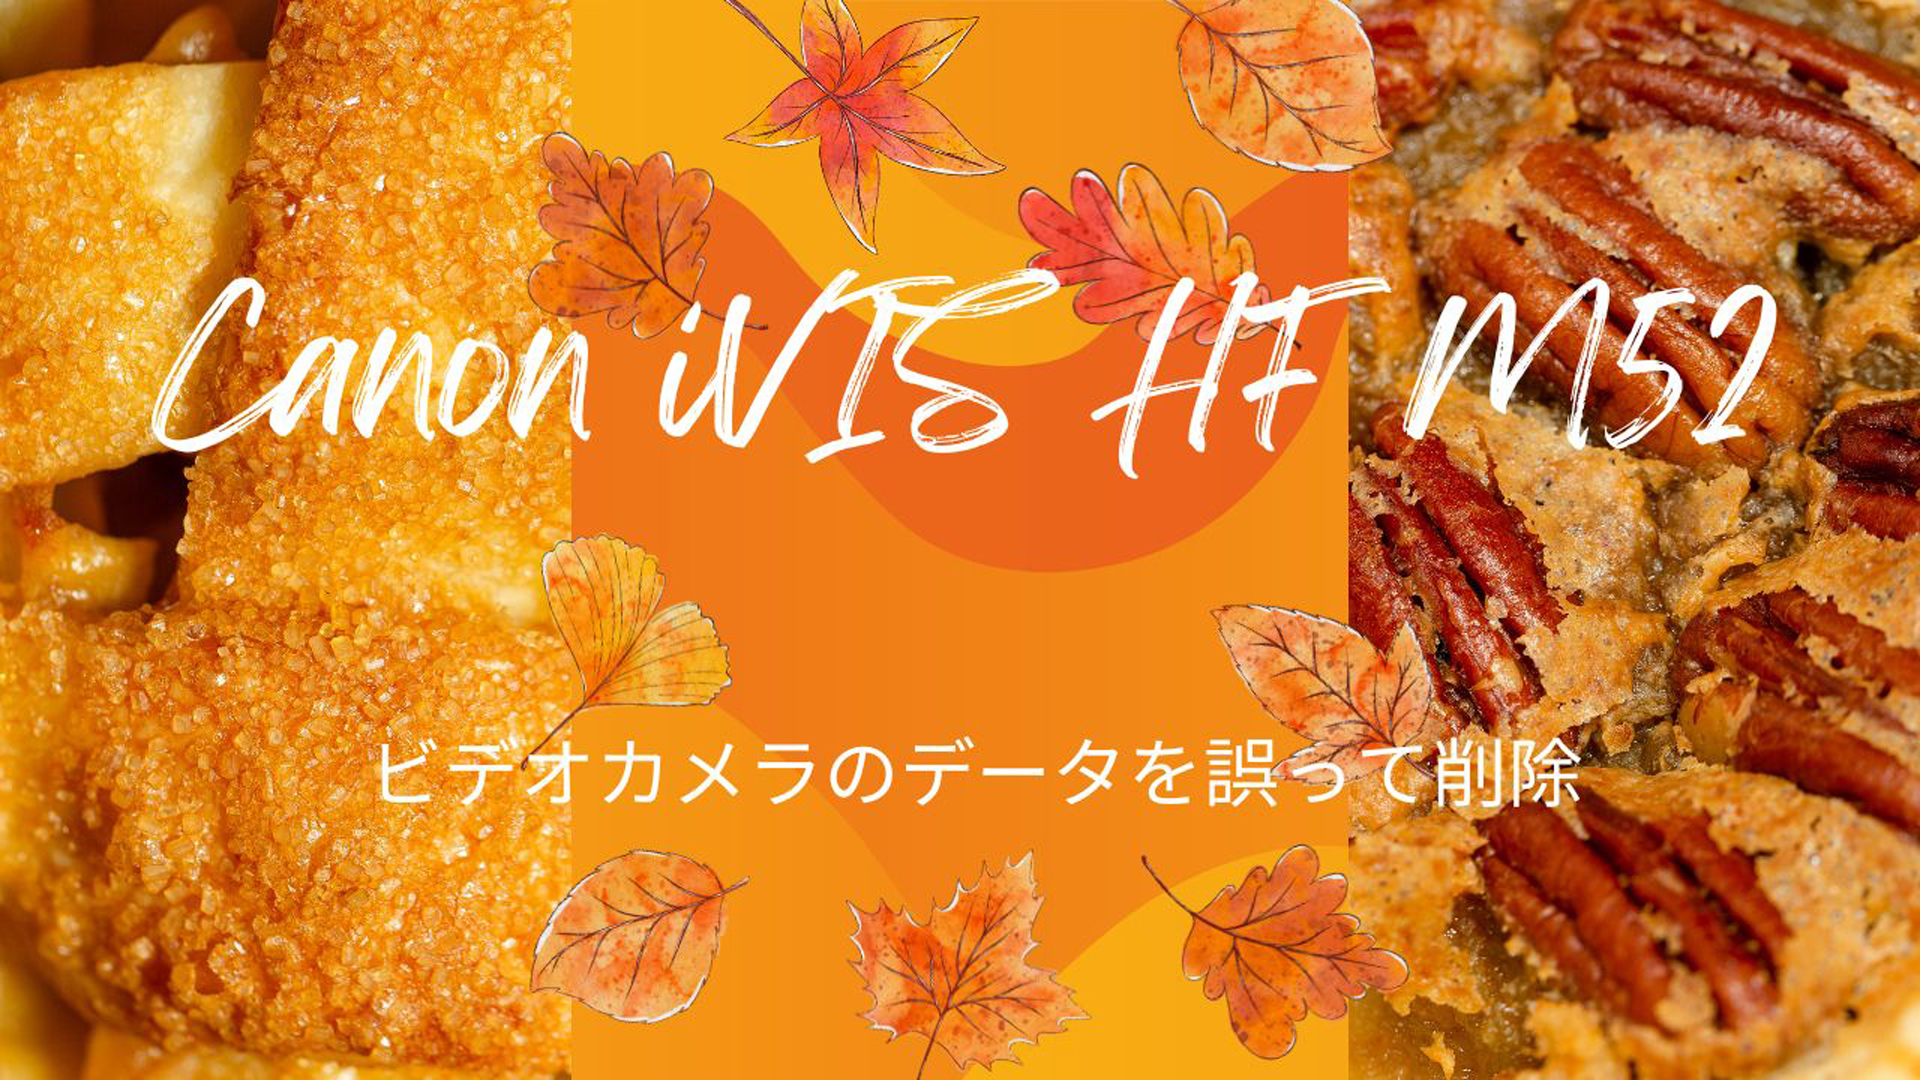 Canon iVIS HF M52ビデオカメラのデータ驚きの復旧劇！東京都文京区の成功事例